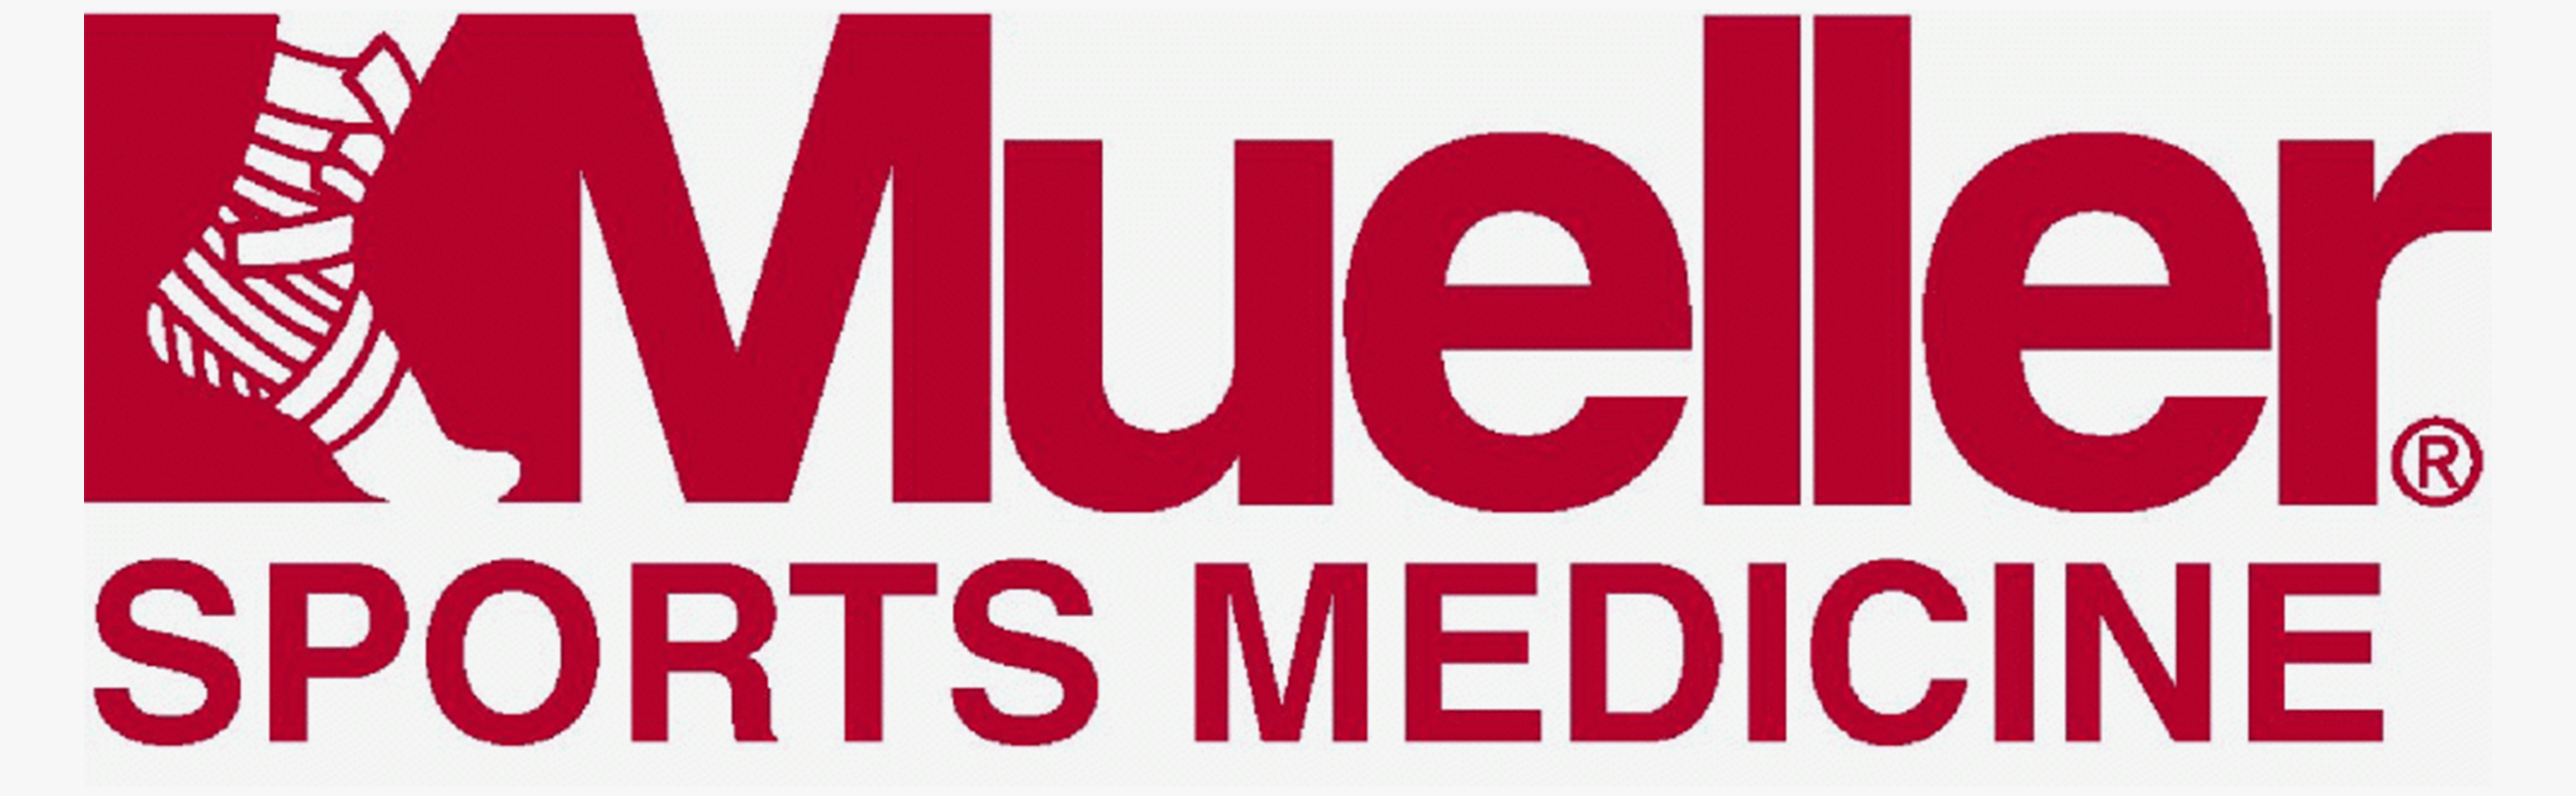 Mueller Sports Medicine, Inc.